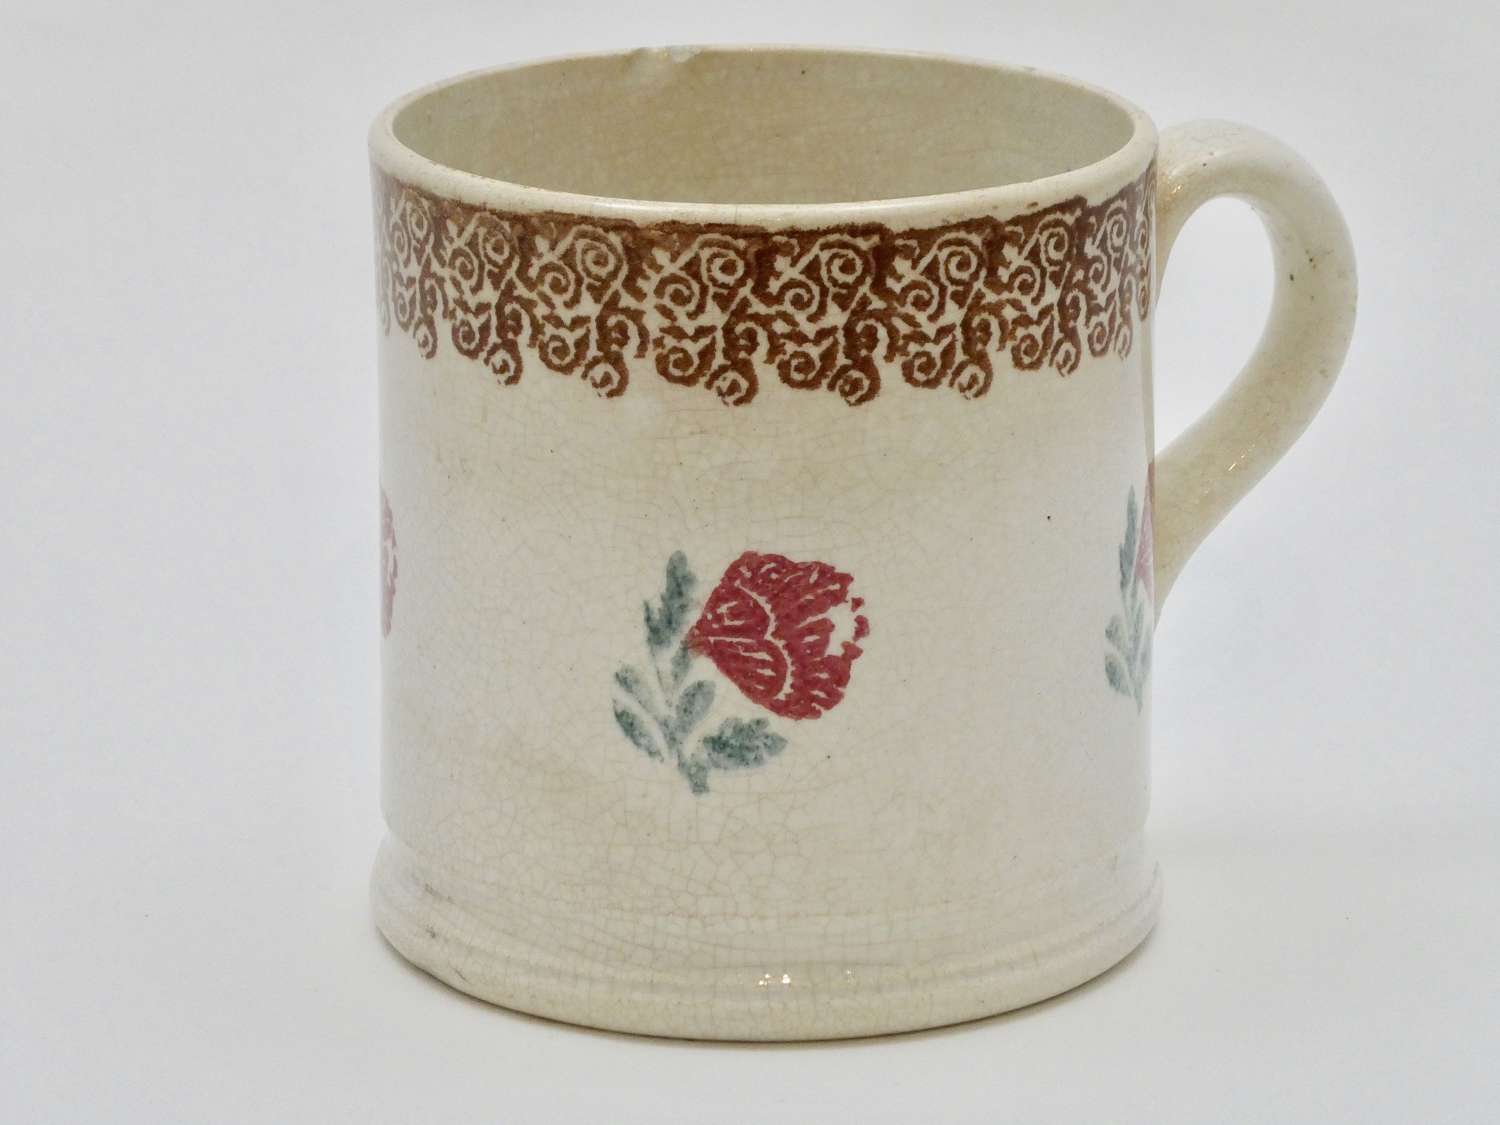 19th Century Sponge Ware Mug